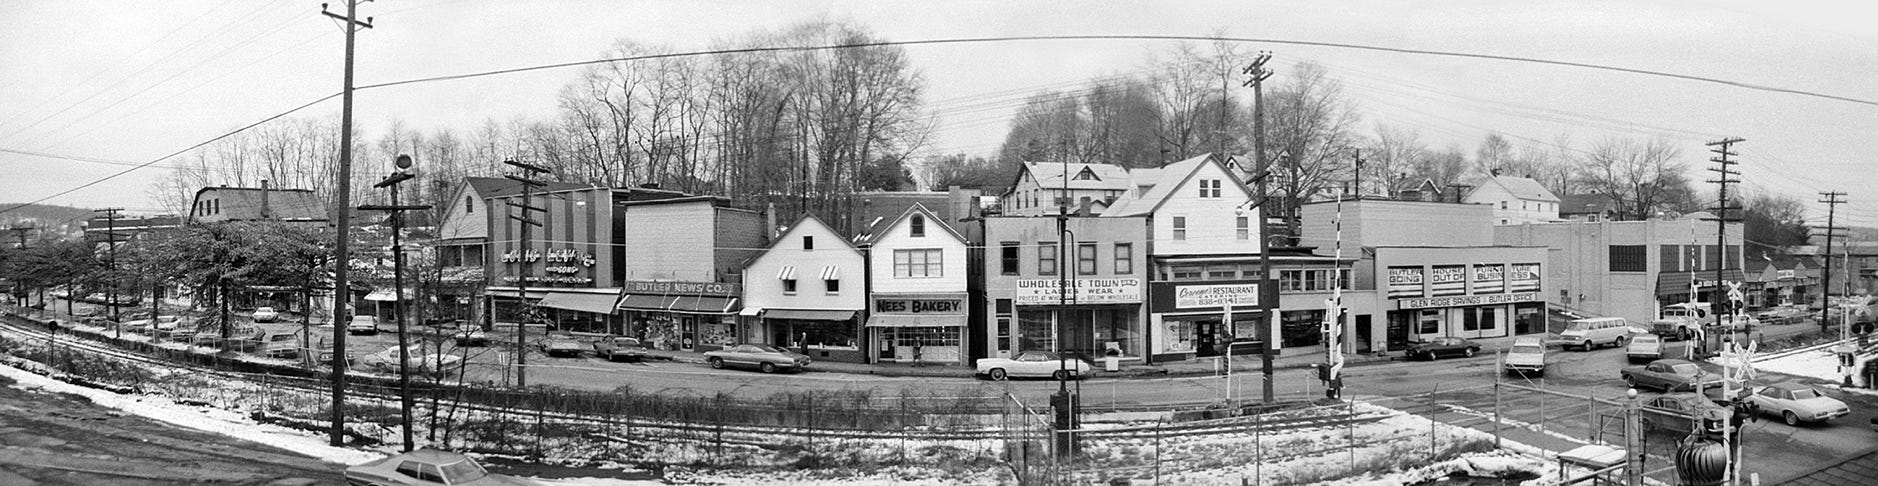 Main Street Butler NJ 1975 panorama